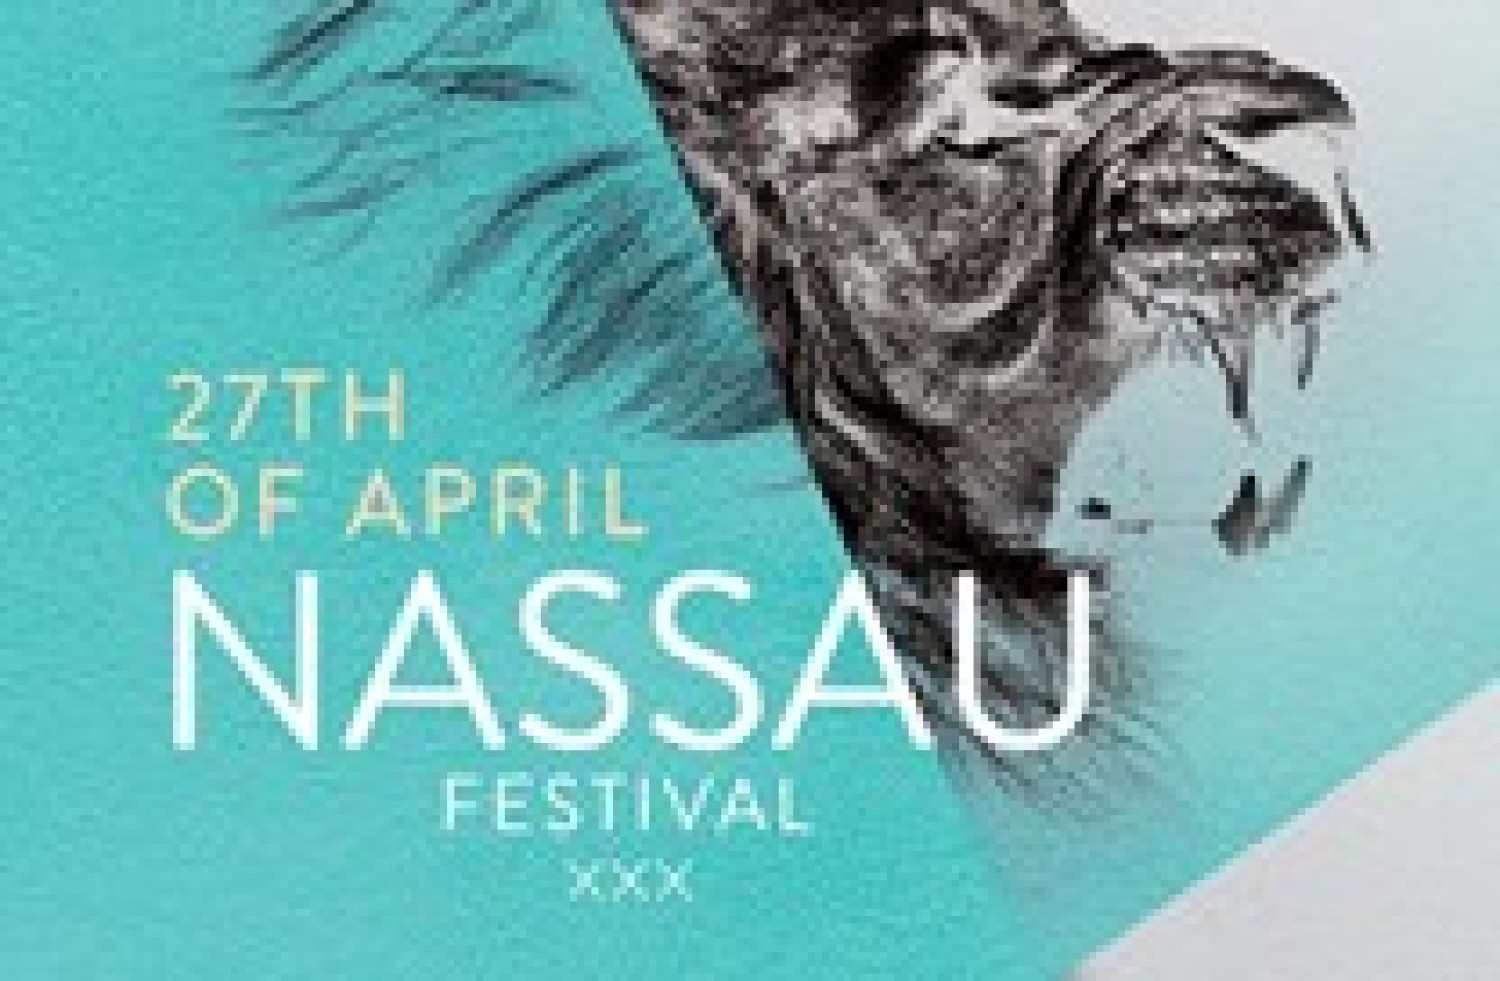 Party report: Nassau Festival, Amsterdam (27-04-2016)